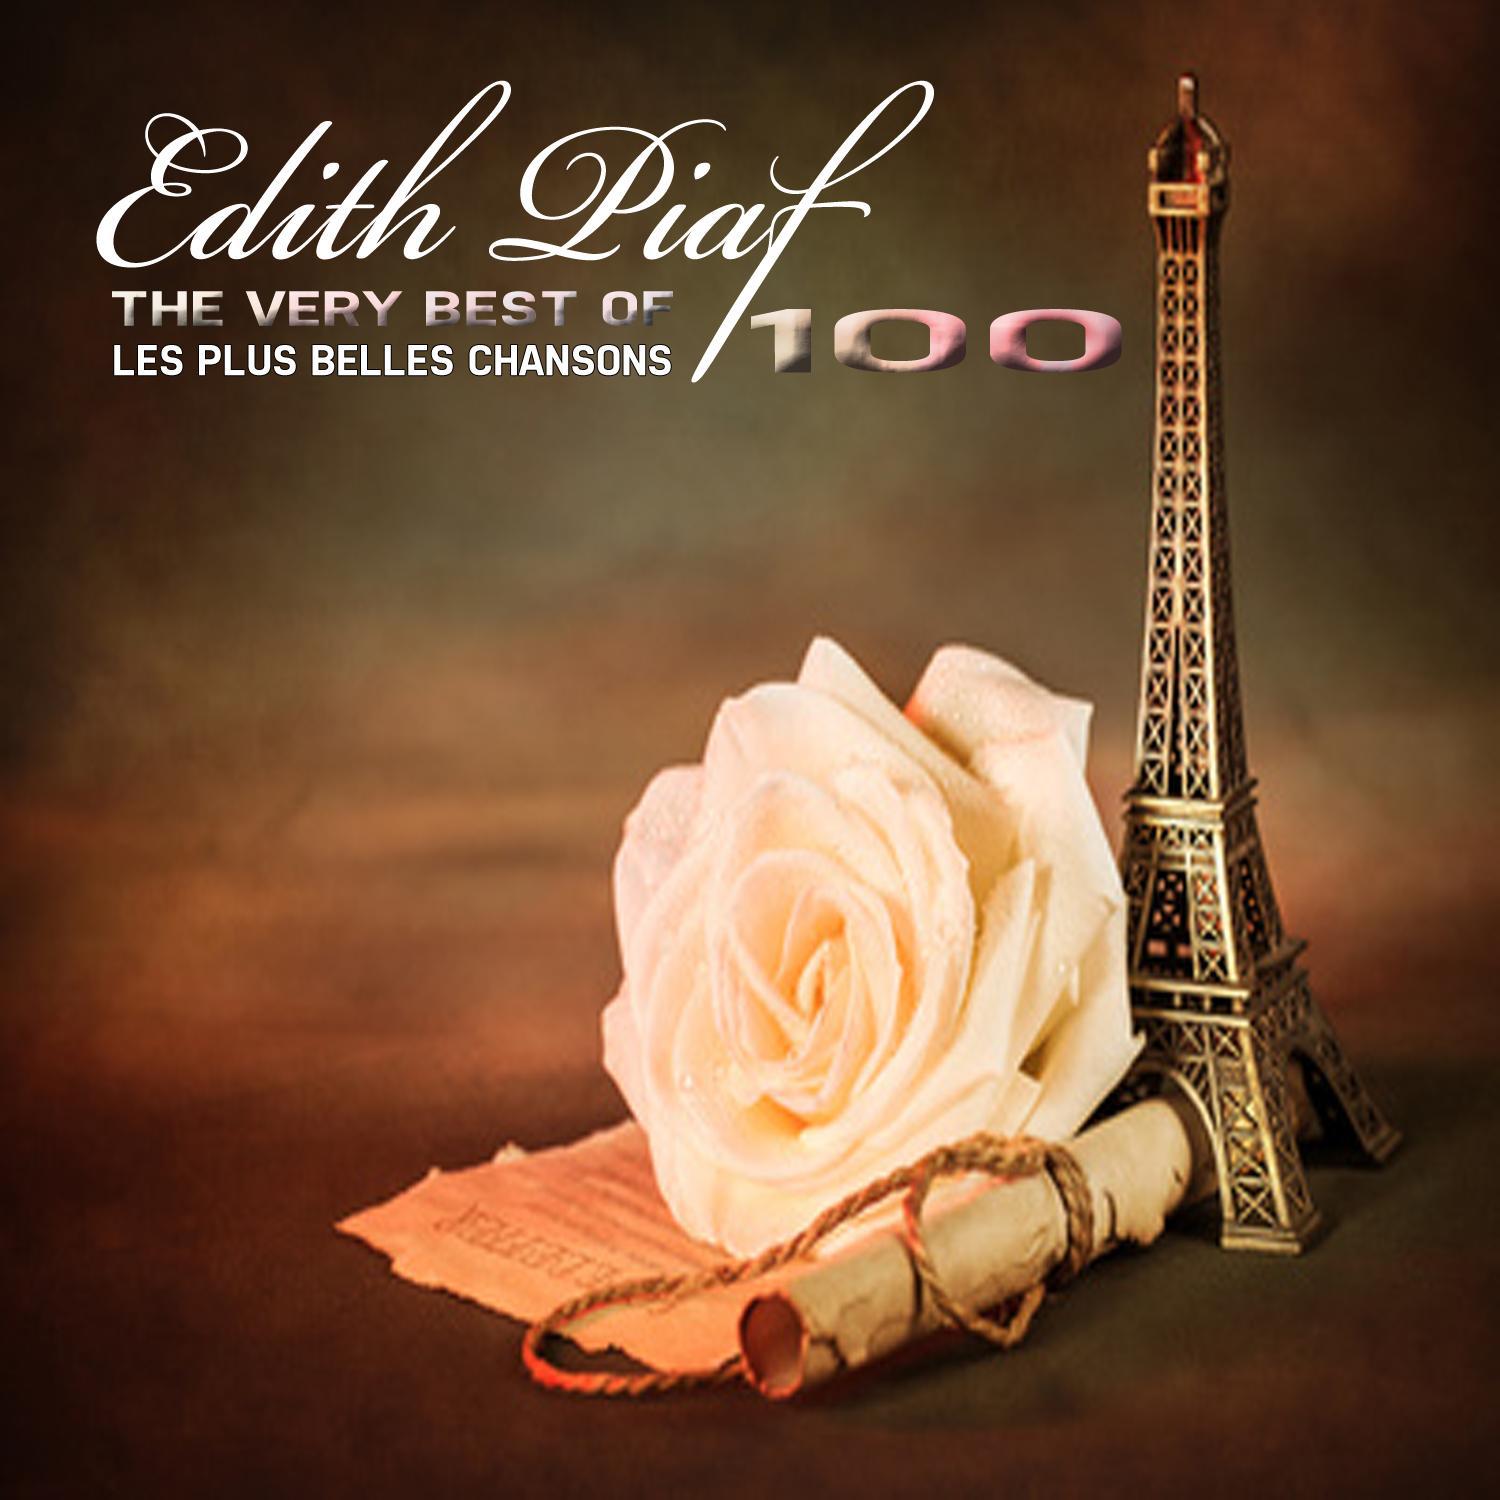 100 the Very Best of Edith Piaf: Les plus belles chansons